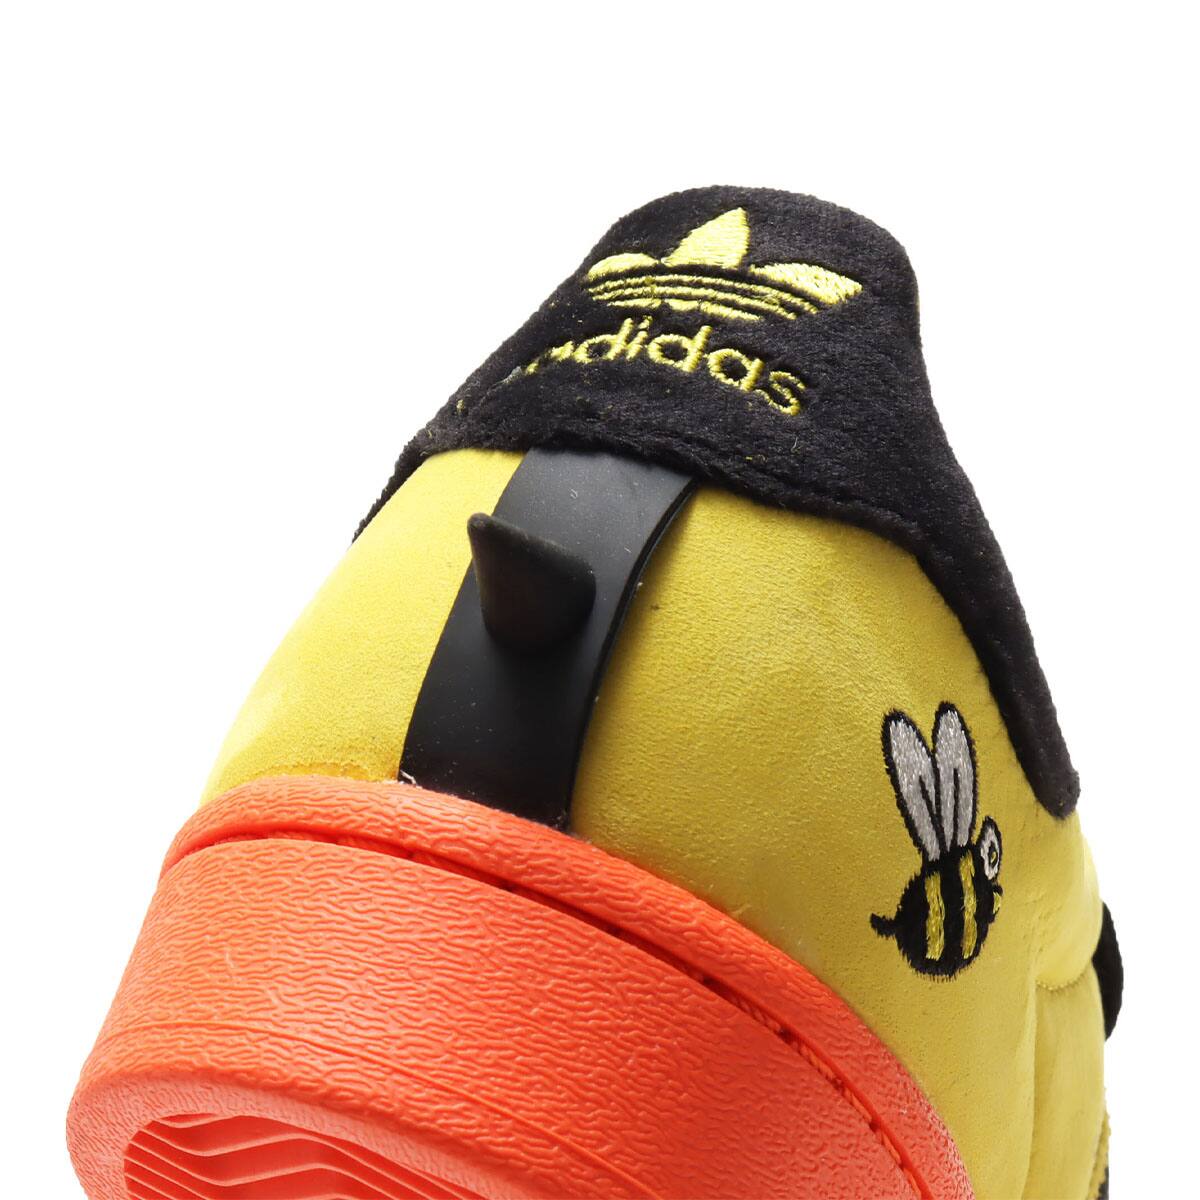 Adidas X Melting Sadness Superstar Yellow Core Black Super Orange fw S